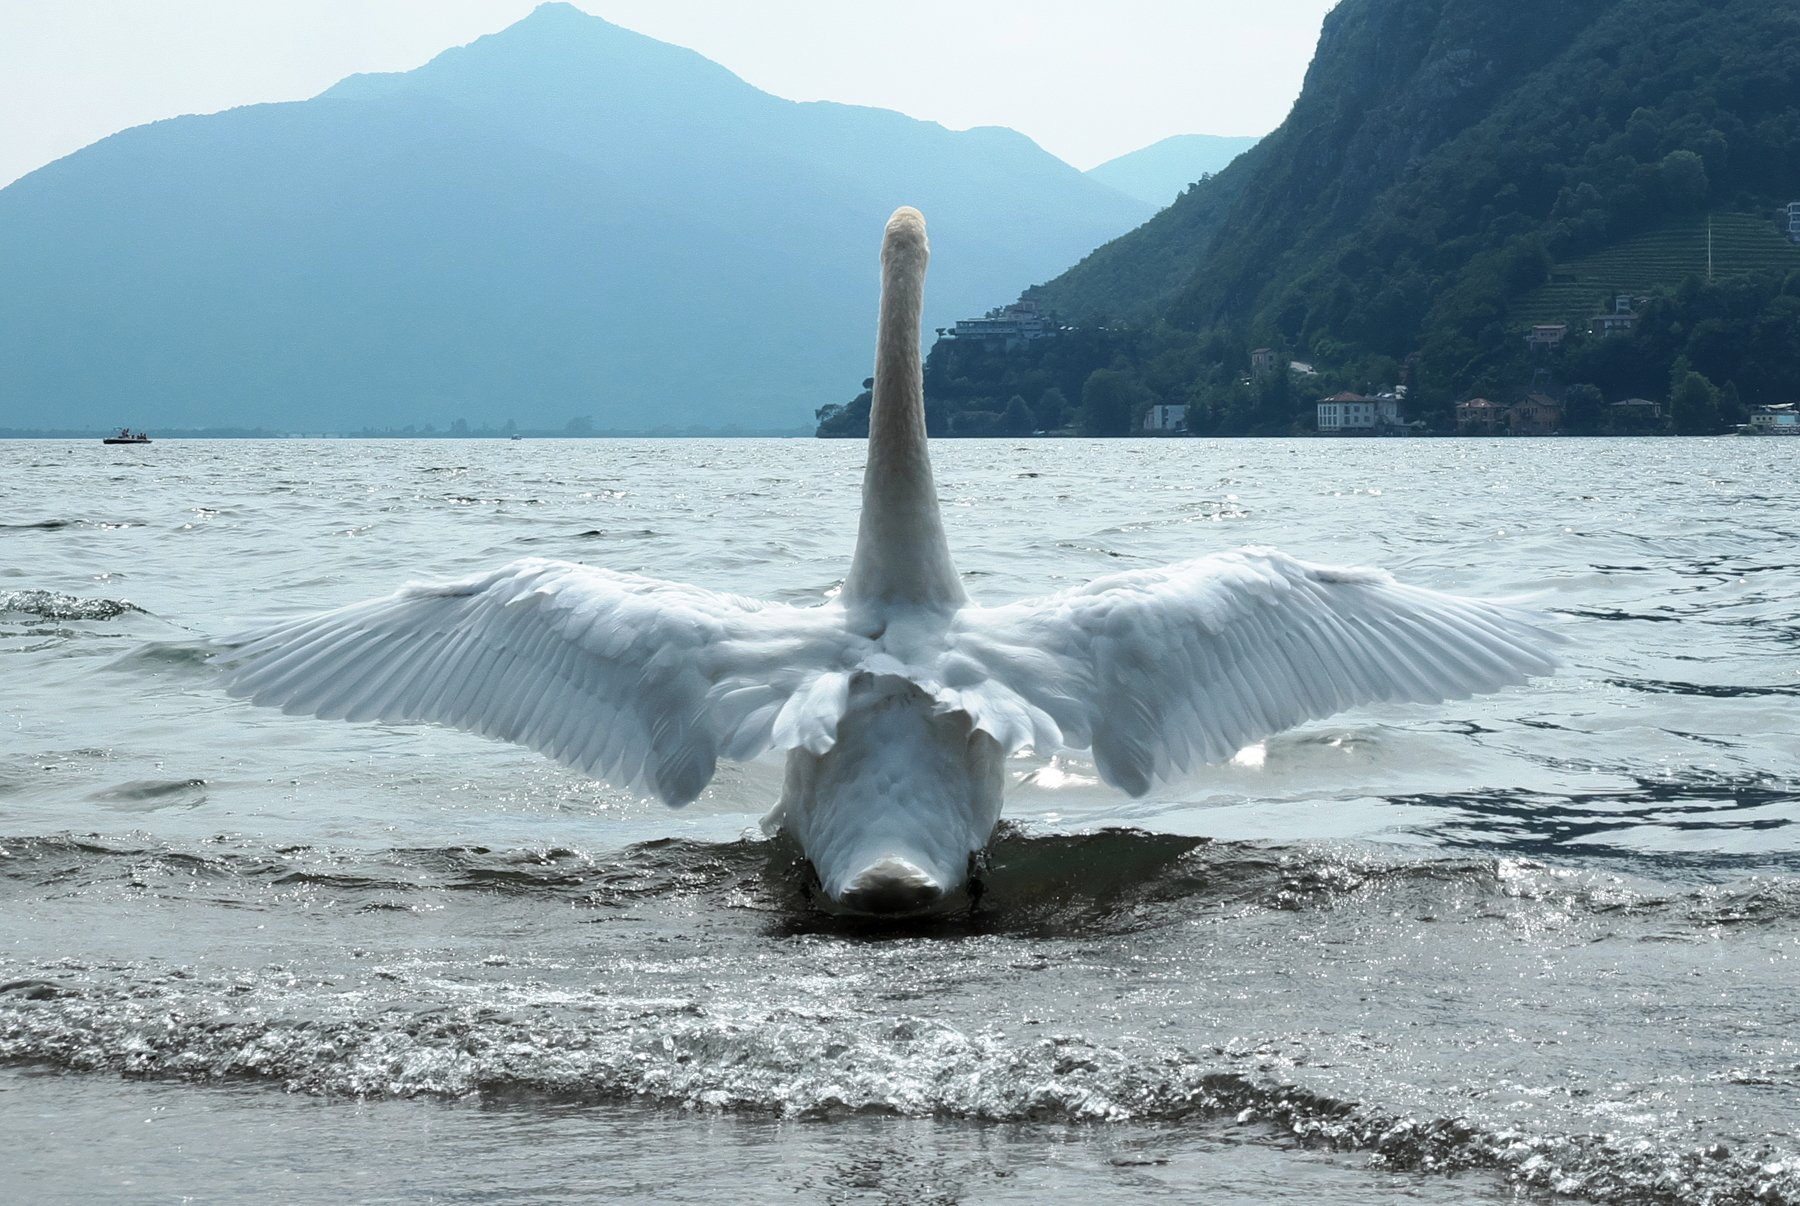 лебедь, взлет, полет, озеро, горы, швейцария, swan, take off, flight, lake, mountains, switzerland, Serg Pechenizhskiy